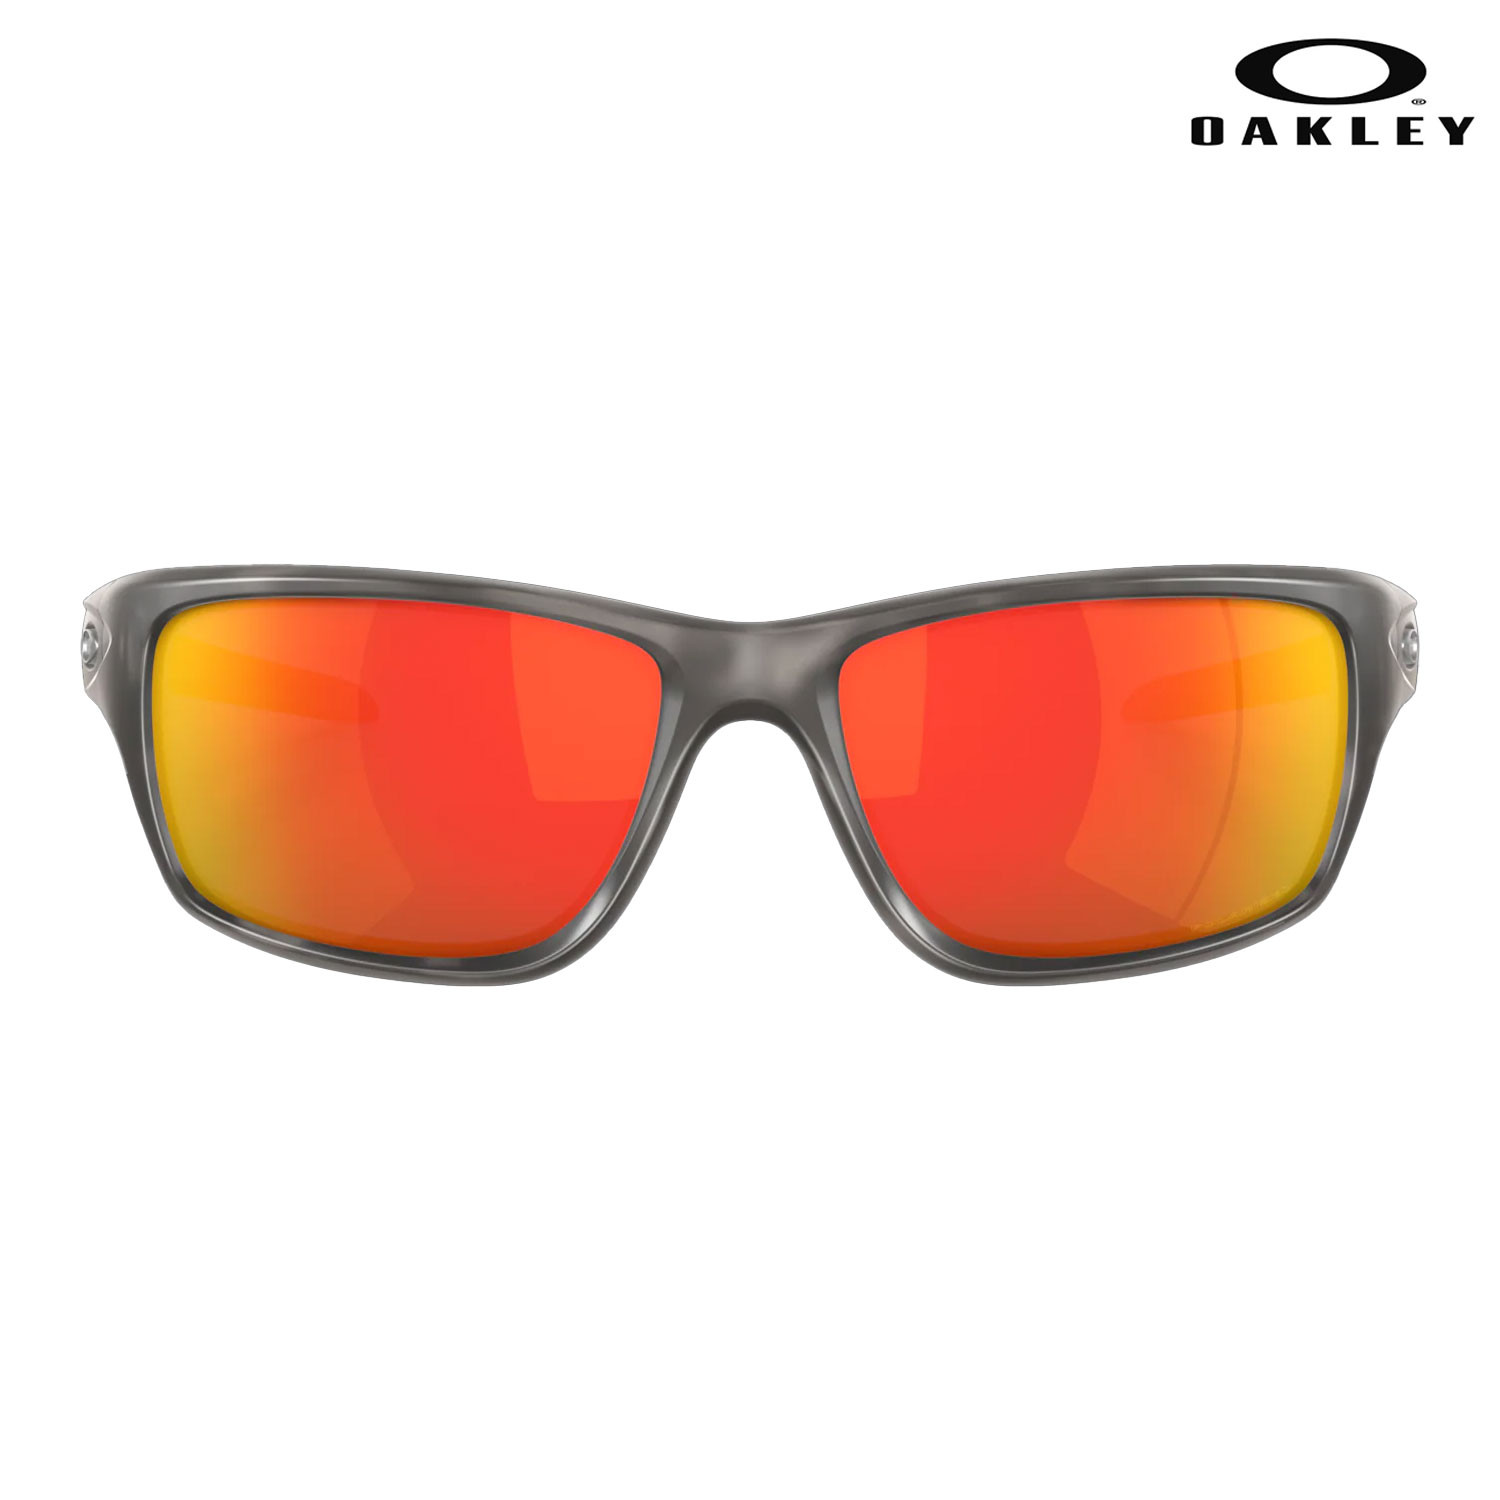 Oakley Canteen Polarized Sunglasses - Optics | Wing Supply